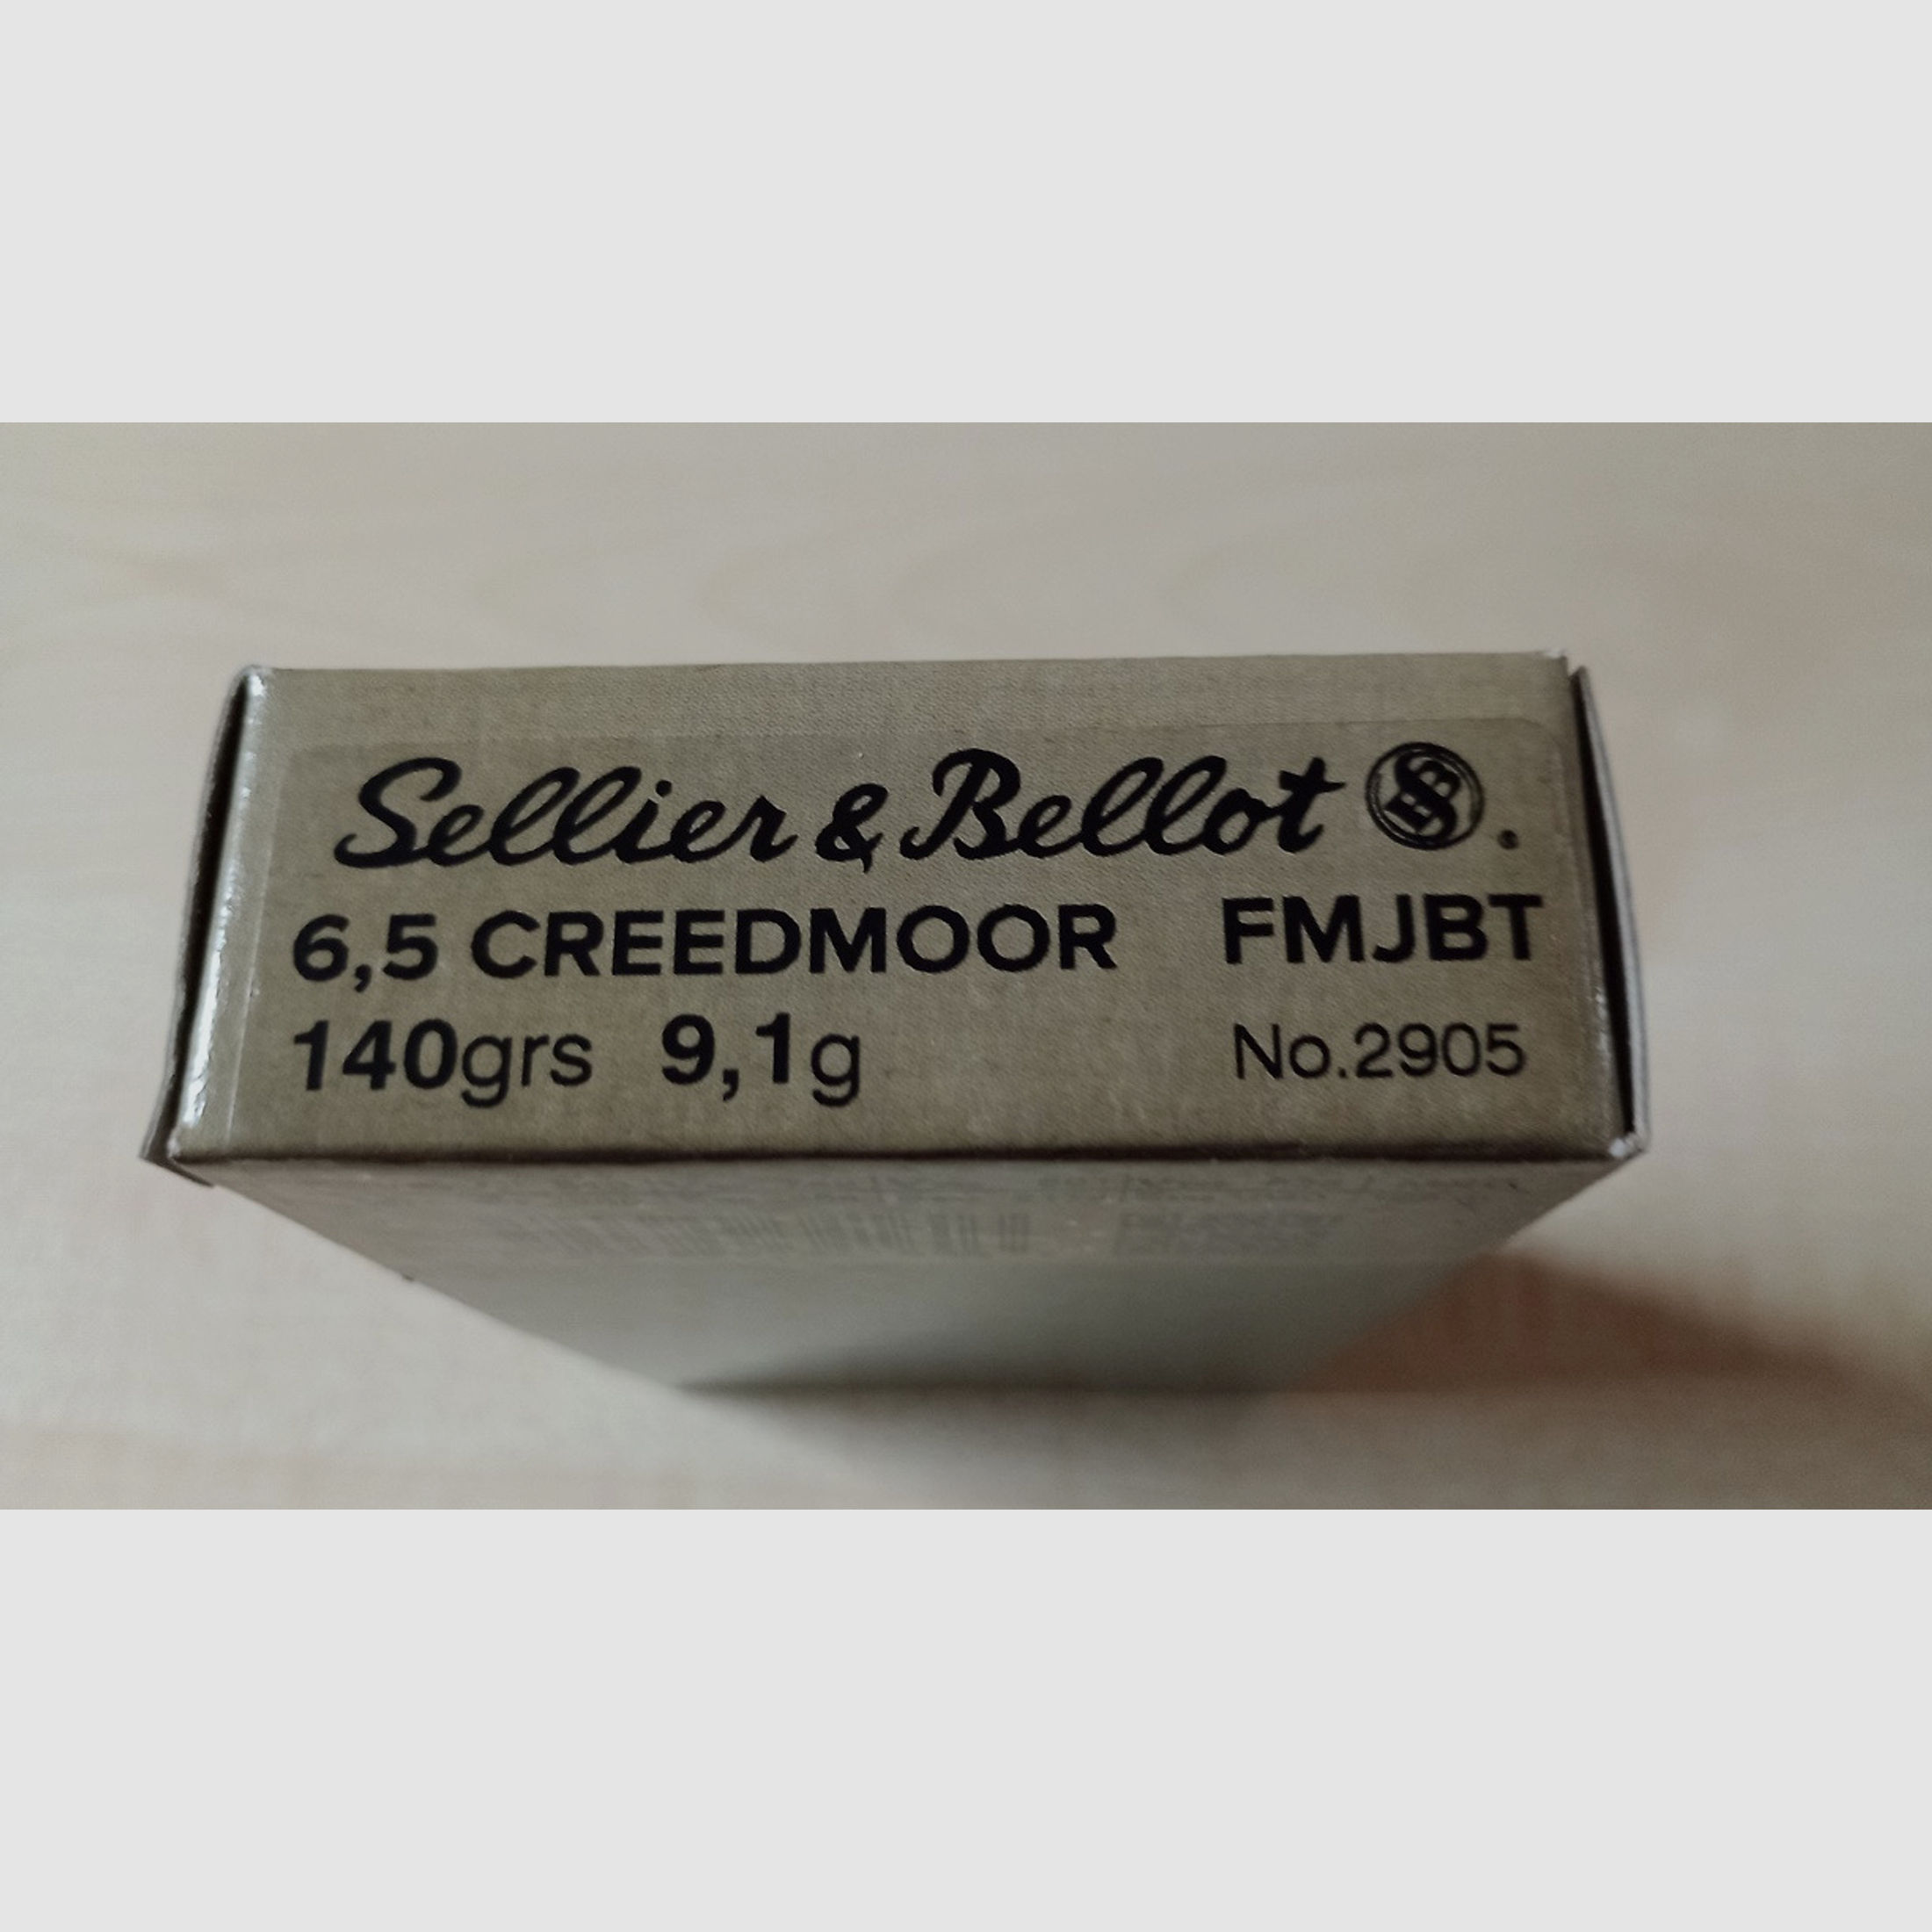 S&B Tactical Ammunition 6,5 Creedmoor  FMJBT  140gr / 9,1g  No. 2905